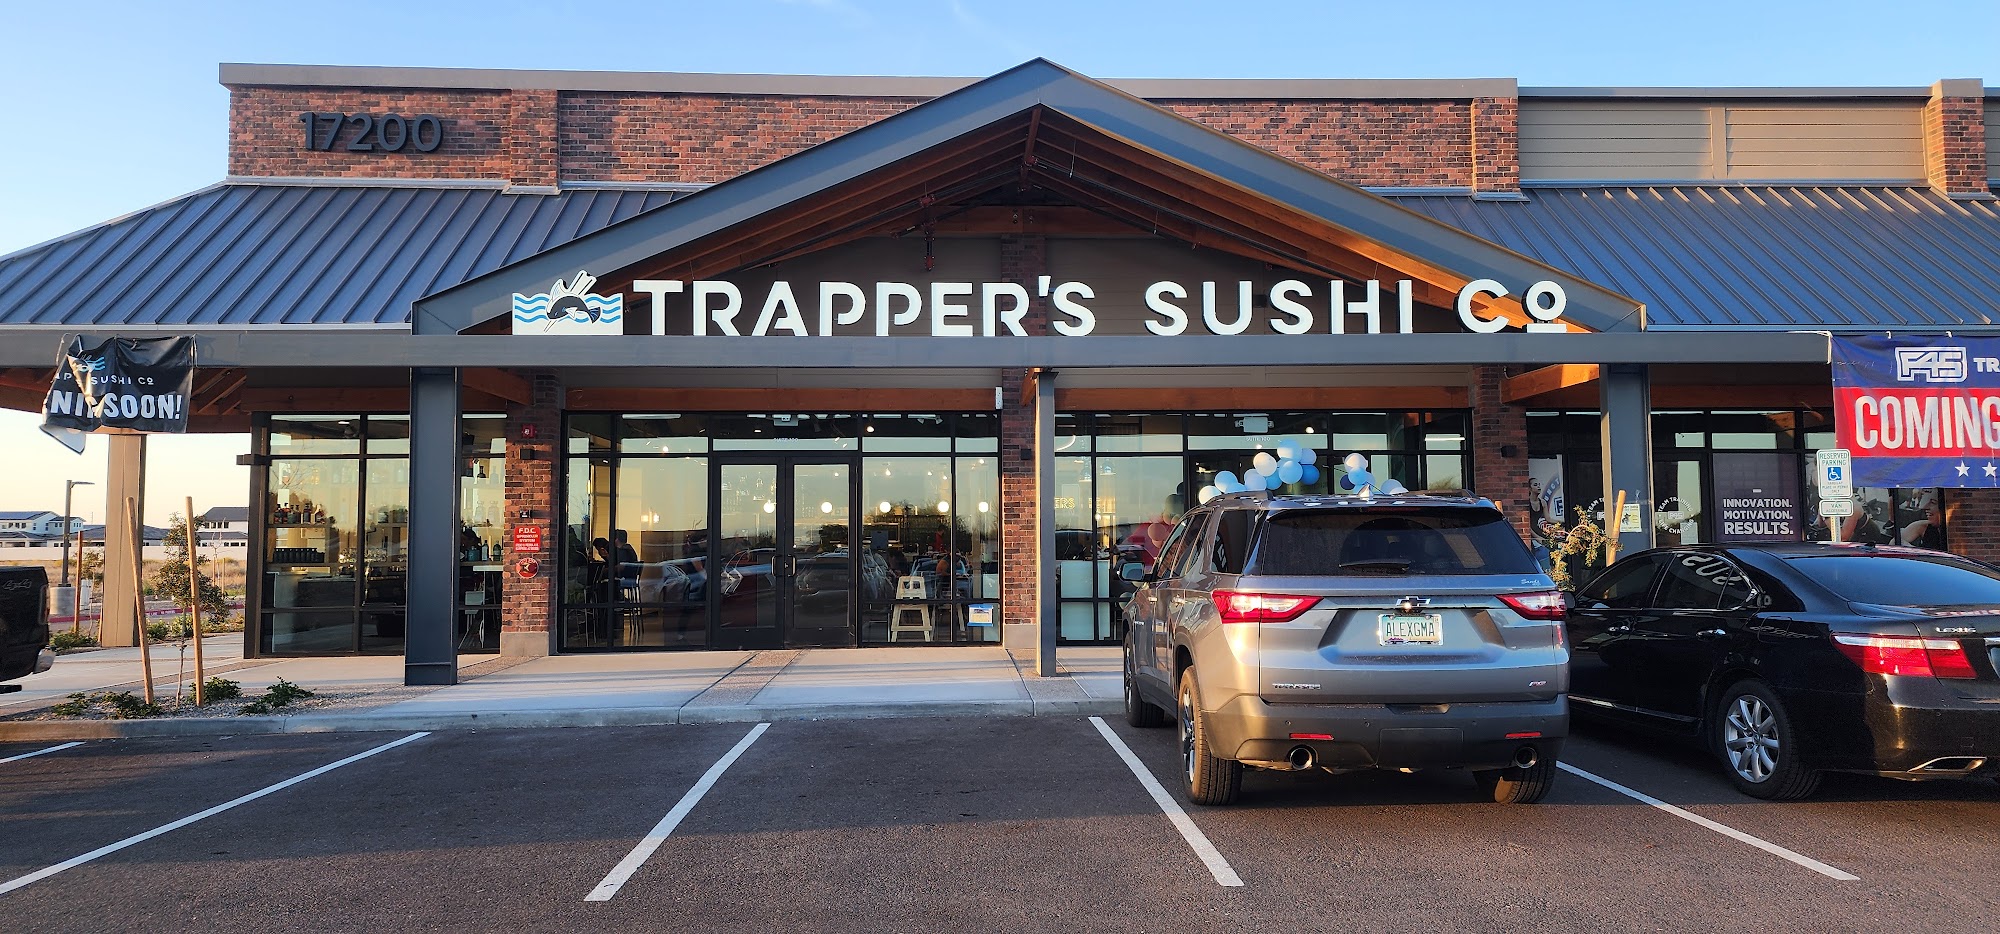 Trapper's Sushi Co. - Surprise